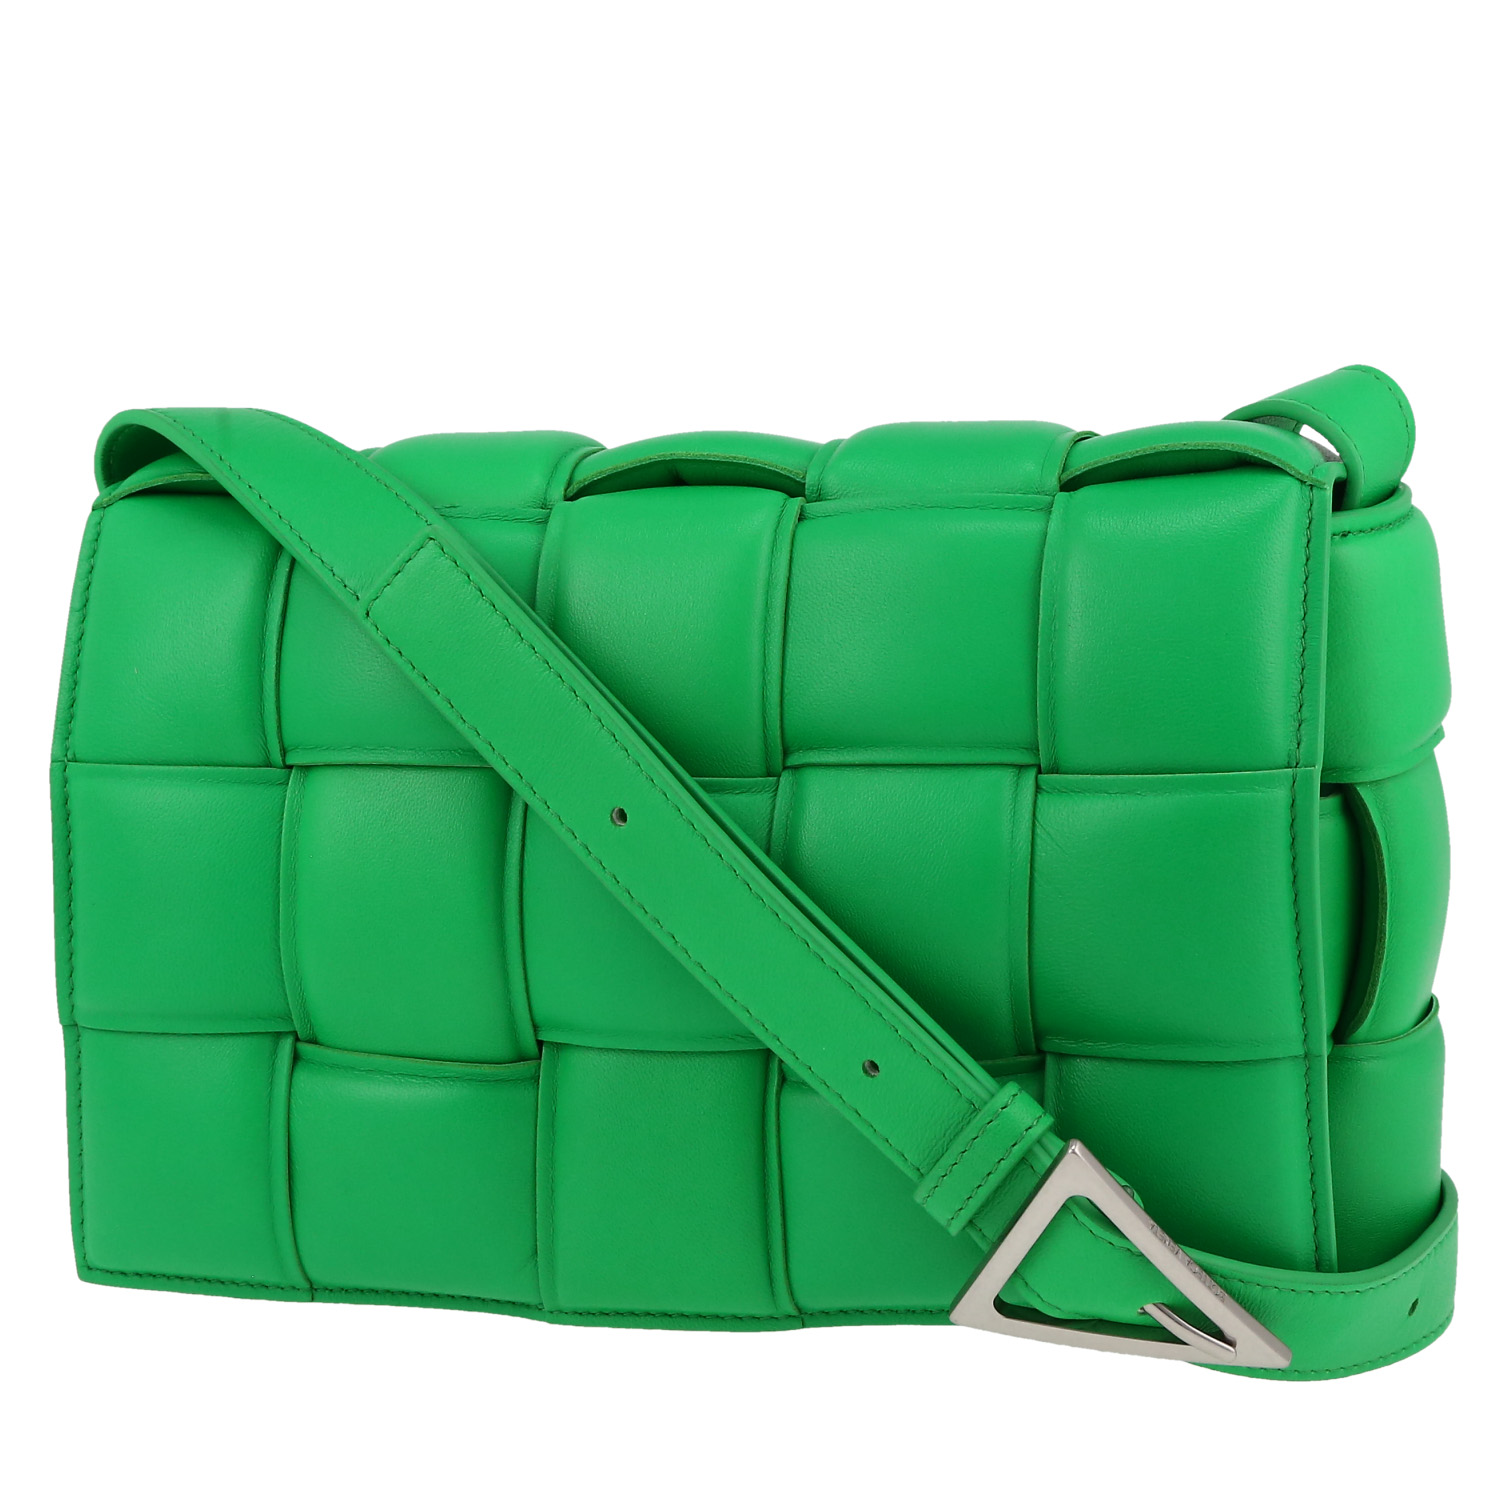 Bottega Veneta: Green Intrecciato Messenger Bag